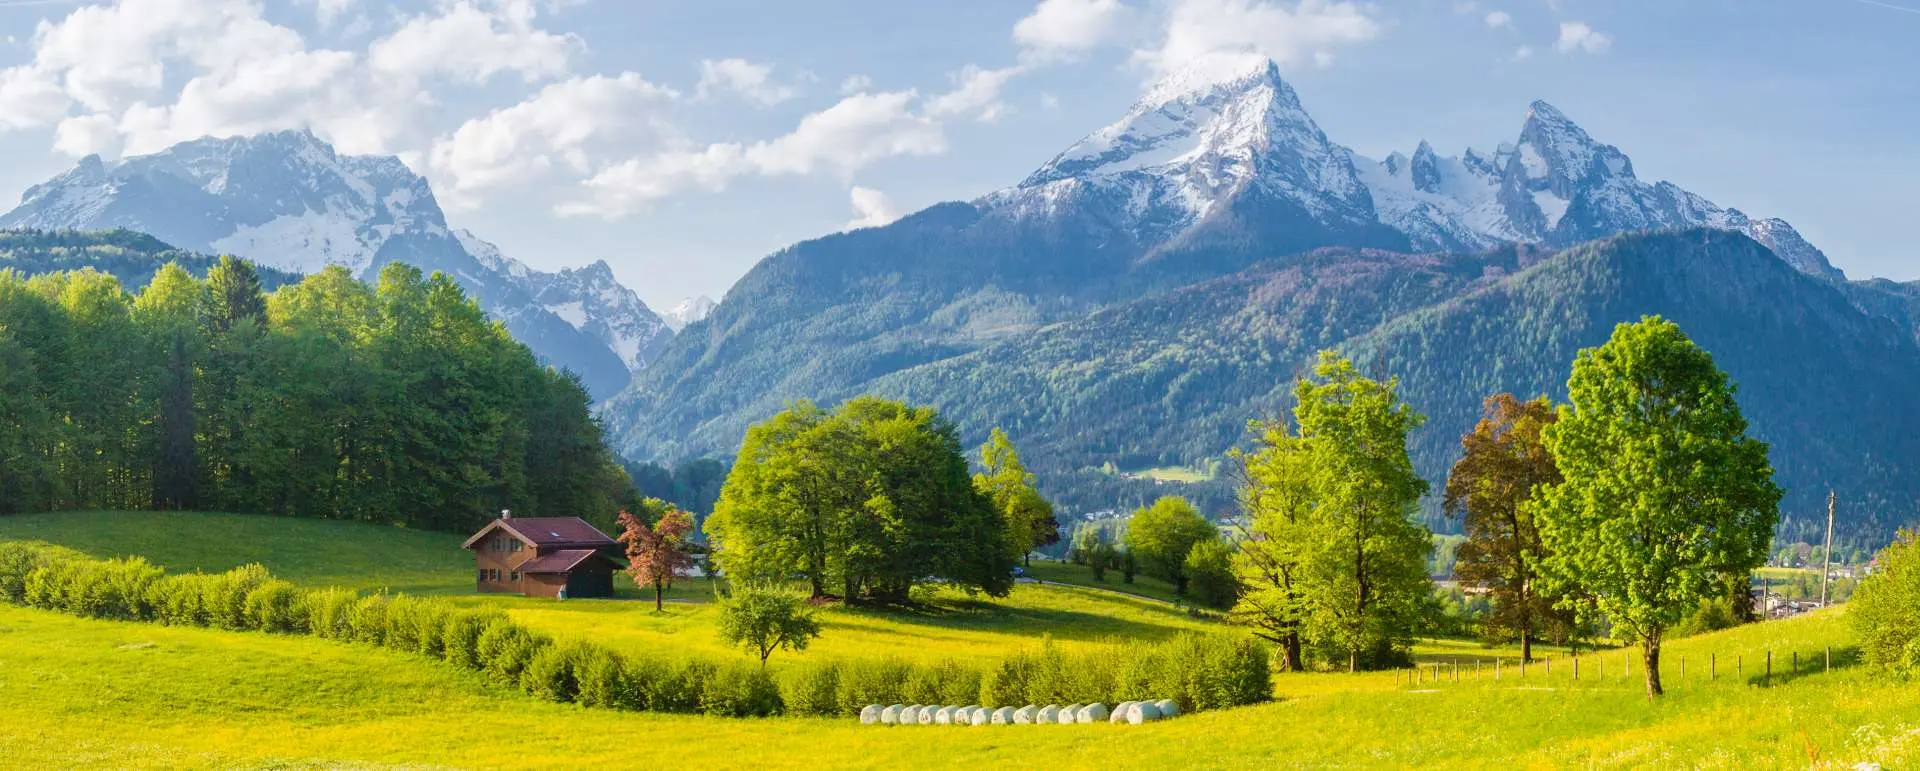 Berchtesgadener Land - the destination for adventure travel accomodation